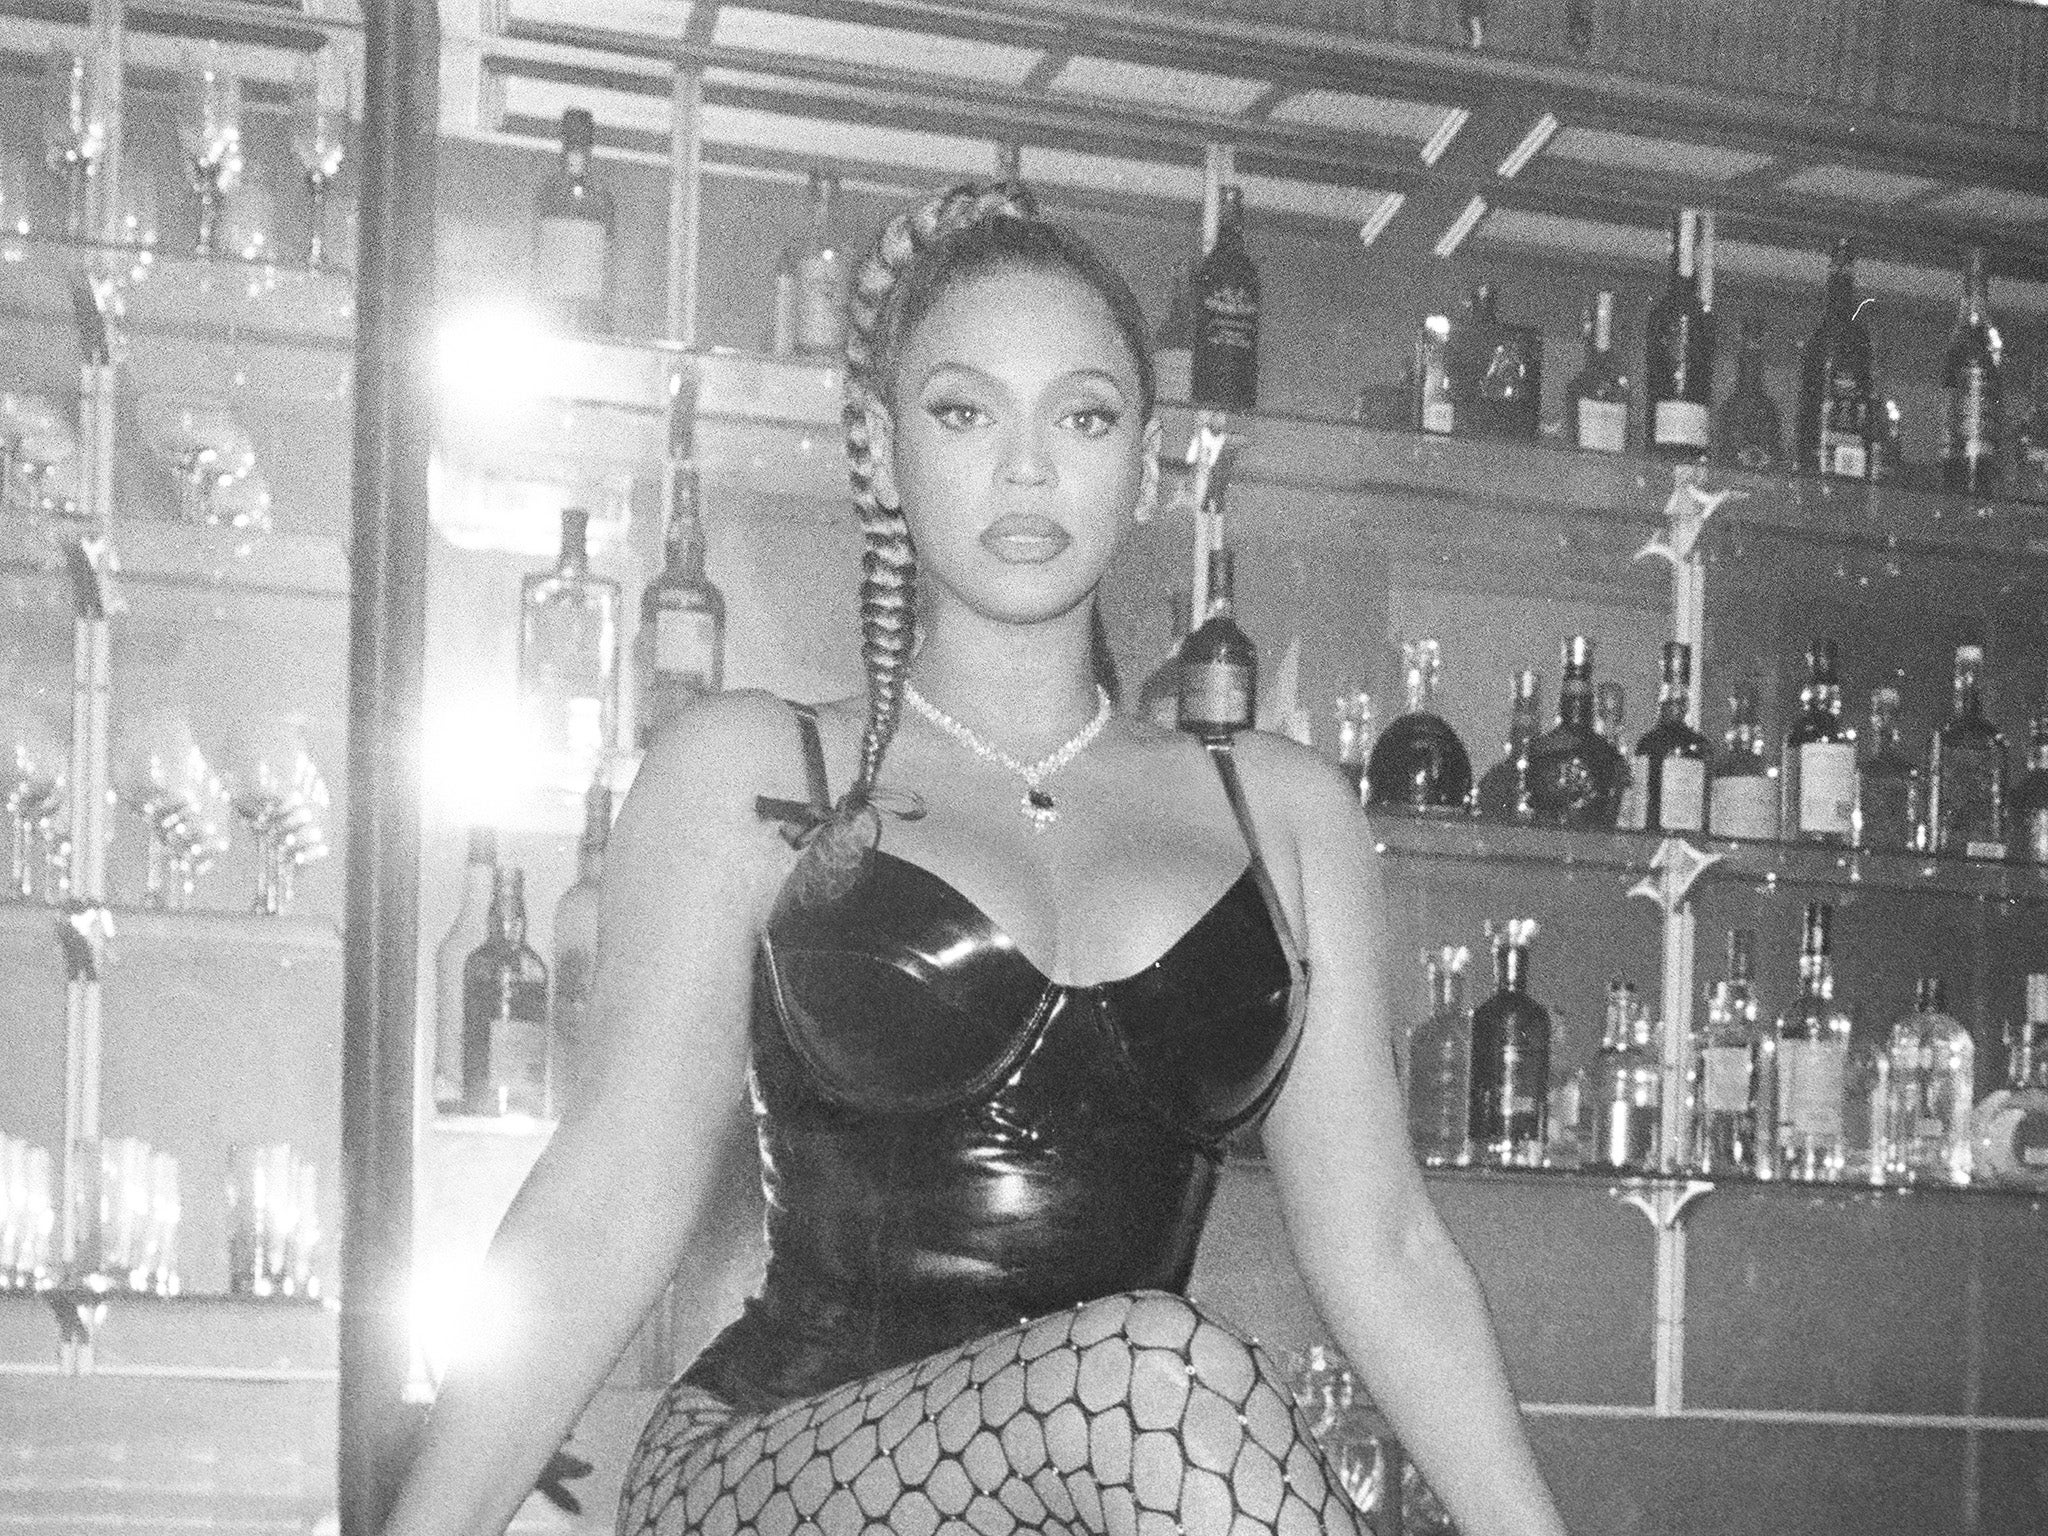 Bar fly: Beyoncé in artwork for ‘Renaissance’